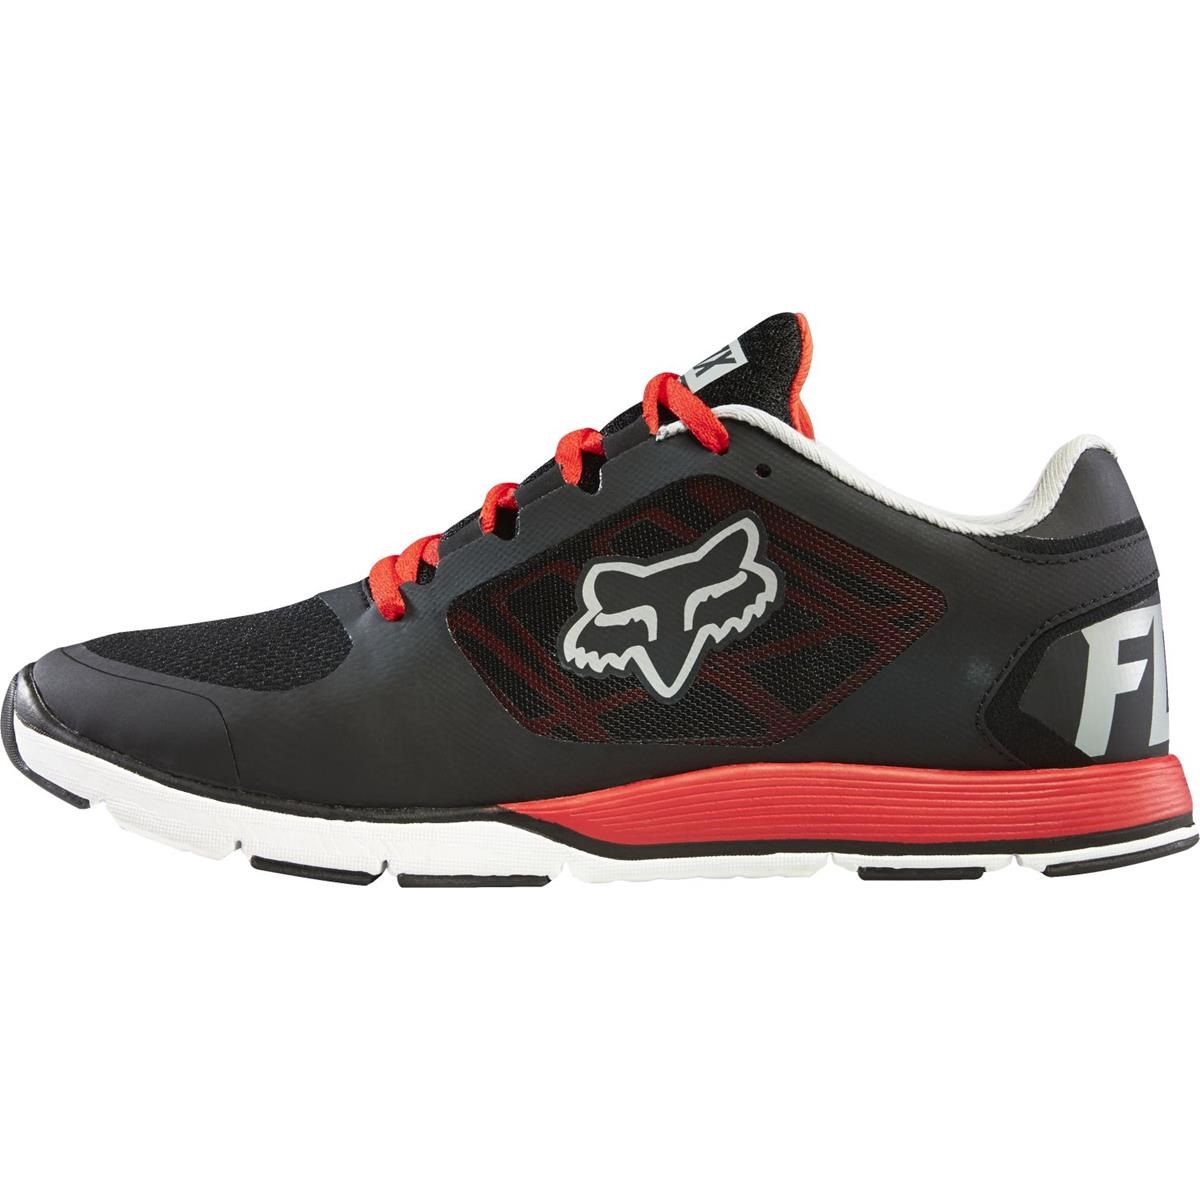 Fox Chaussures Motion Evo Black/Red